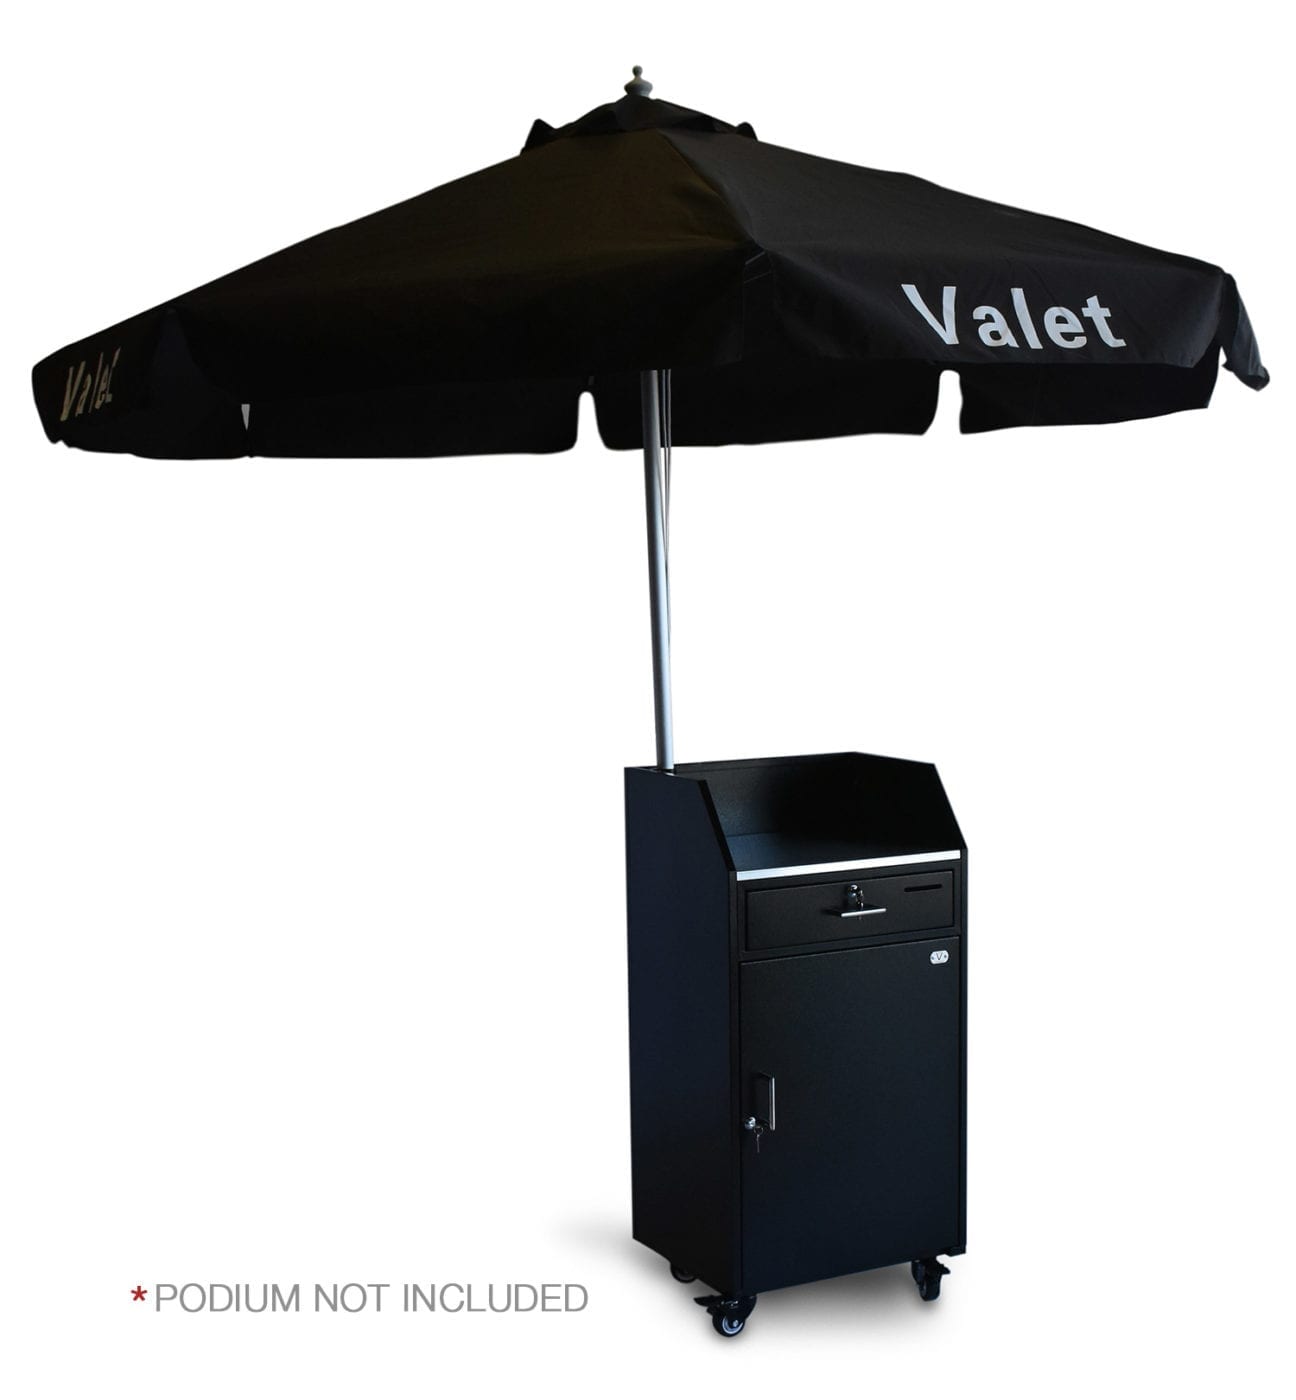 Valet Flap Umbrella - Black